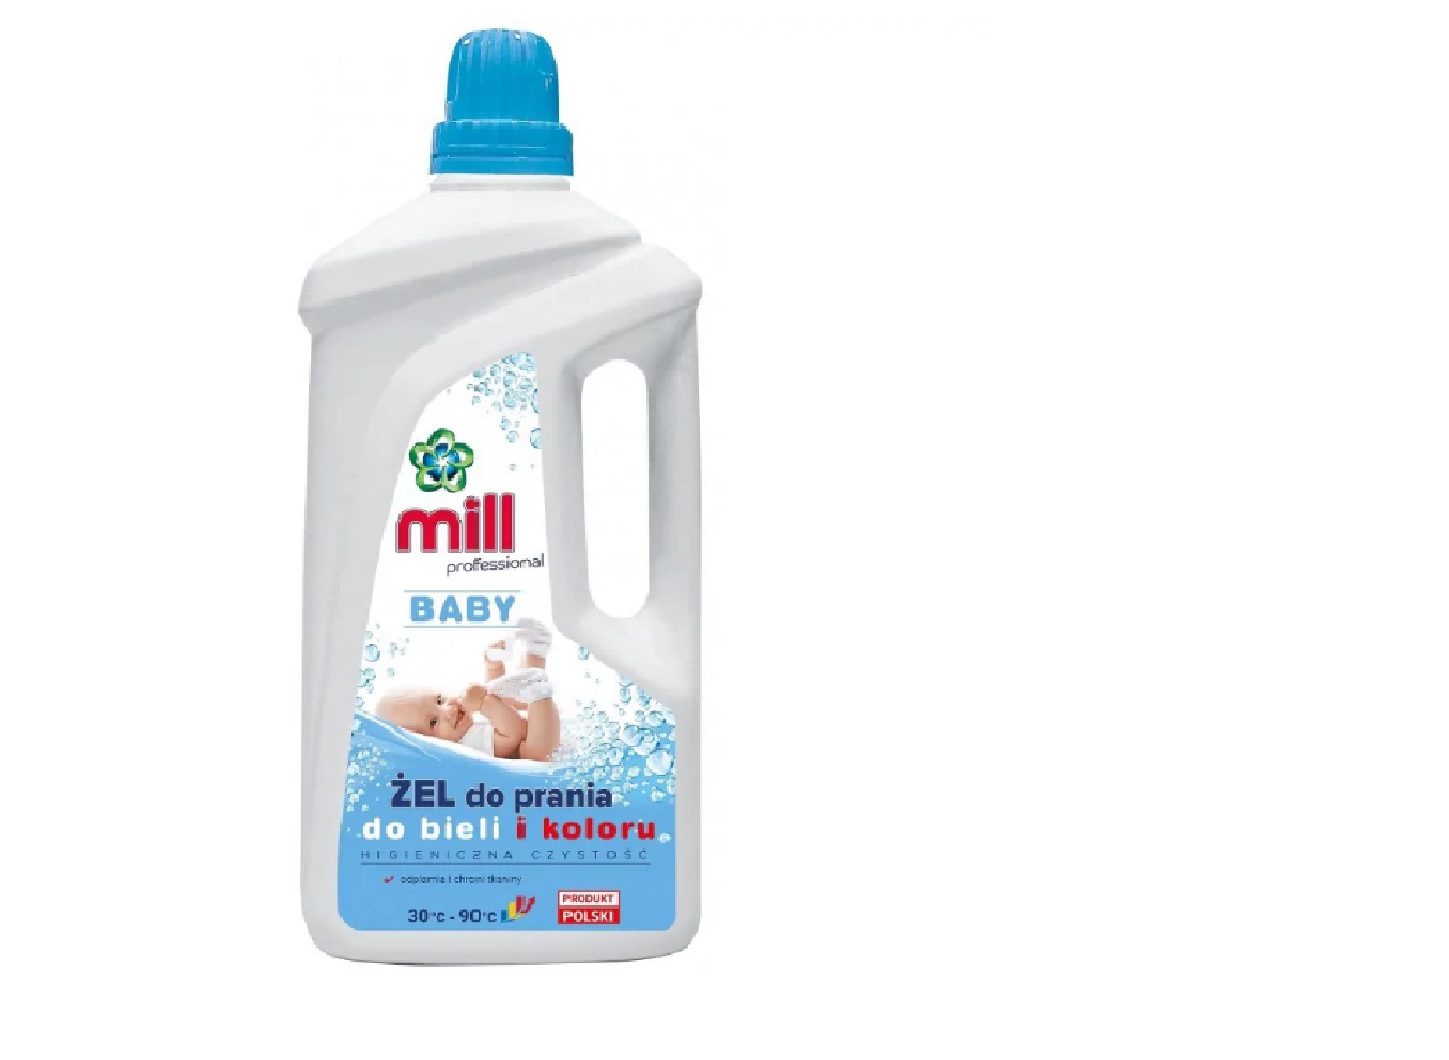 Mill clean univerzálny gél na pranie baby 1,5L